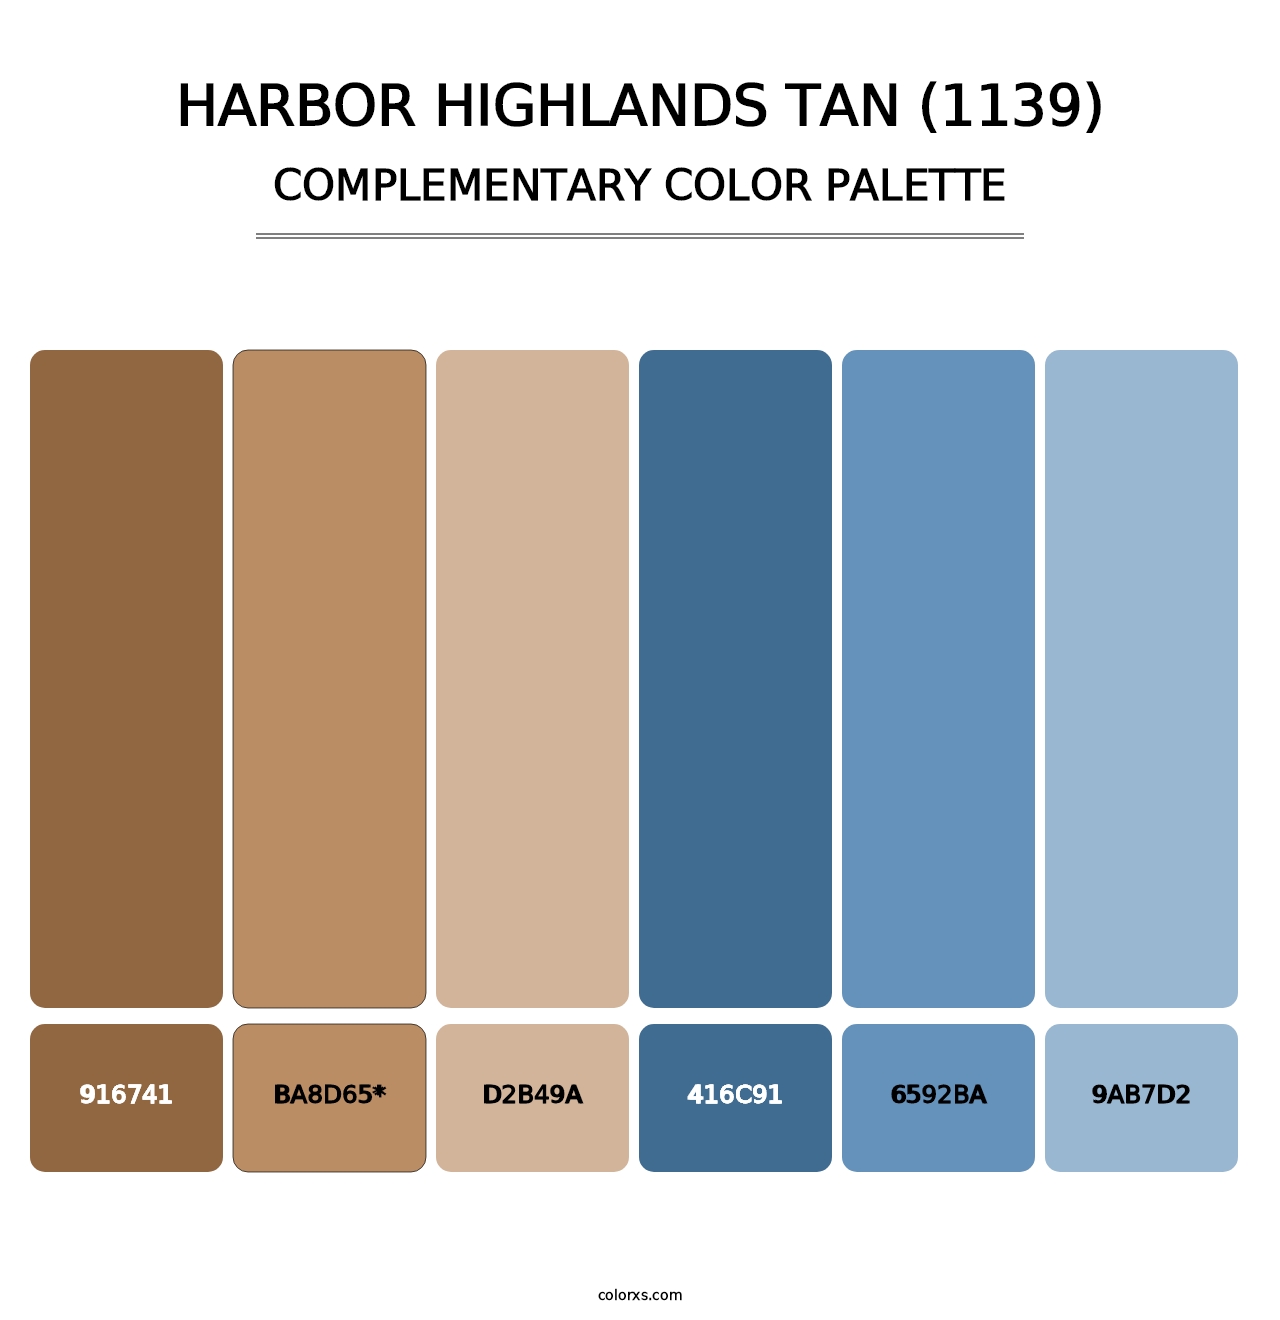 Harbor Highlands Tan (1139) - Complementary Color Palette